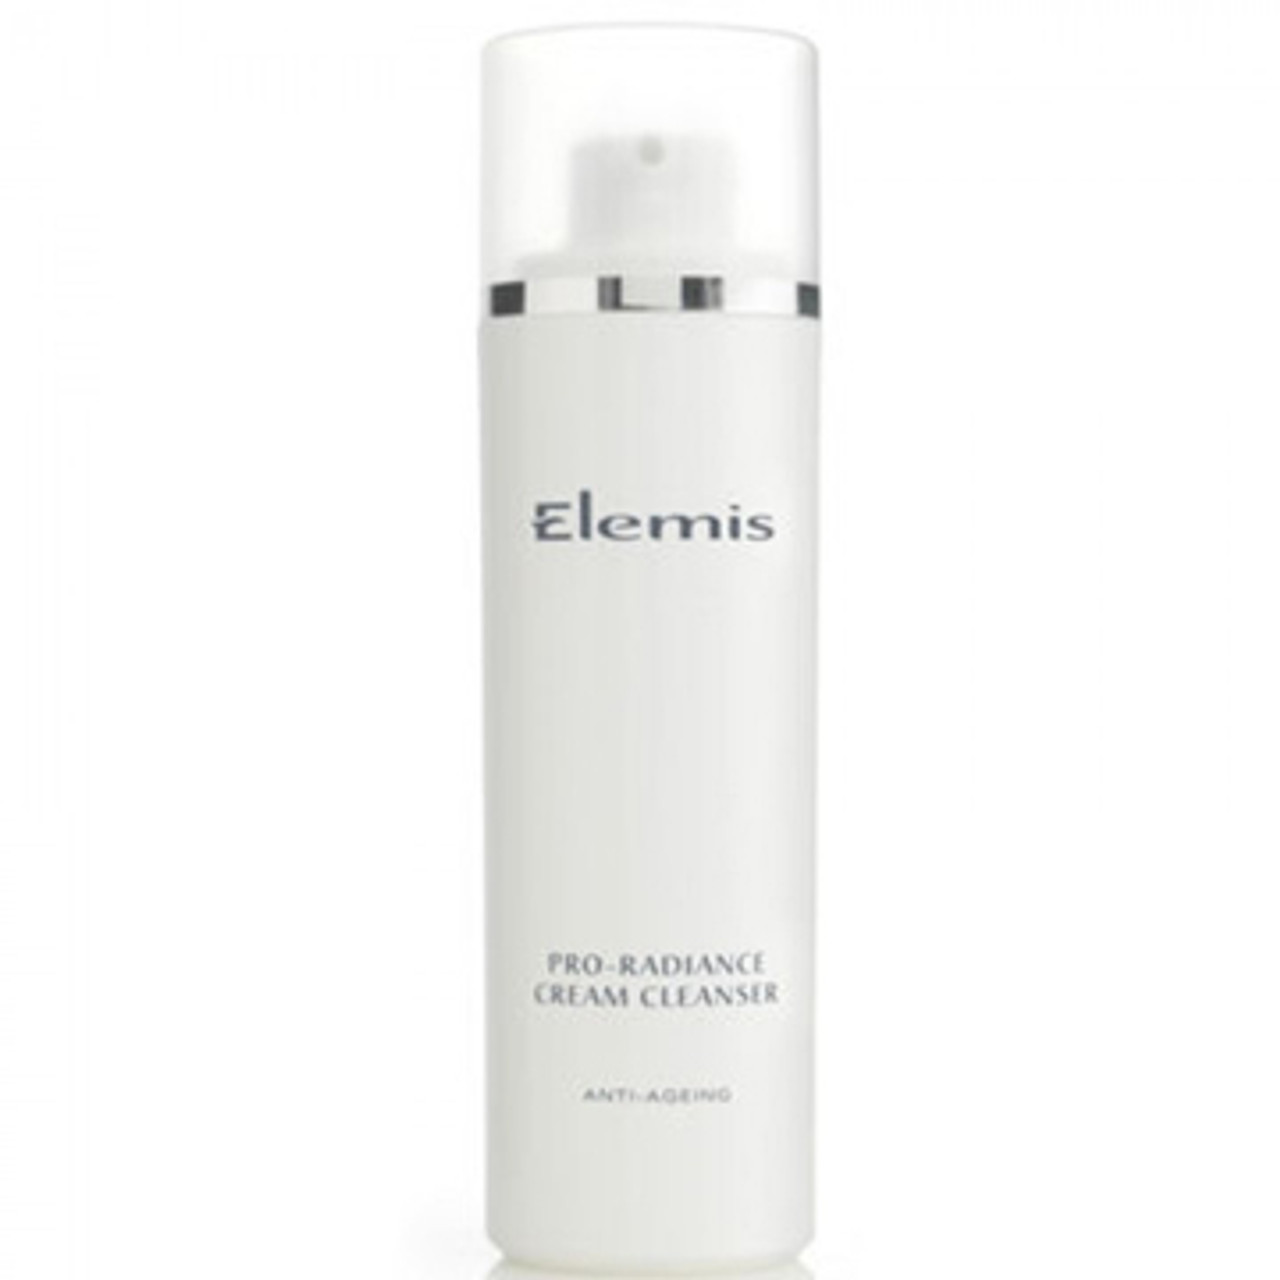 Elemis Pro-Radiance Cream Cleanser - 5.1 oz